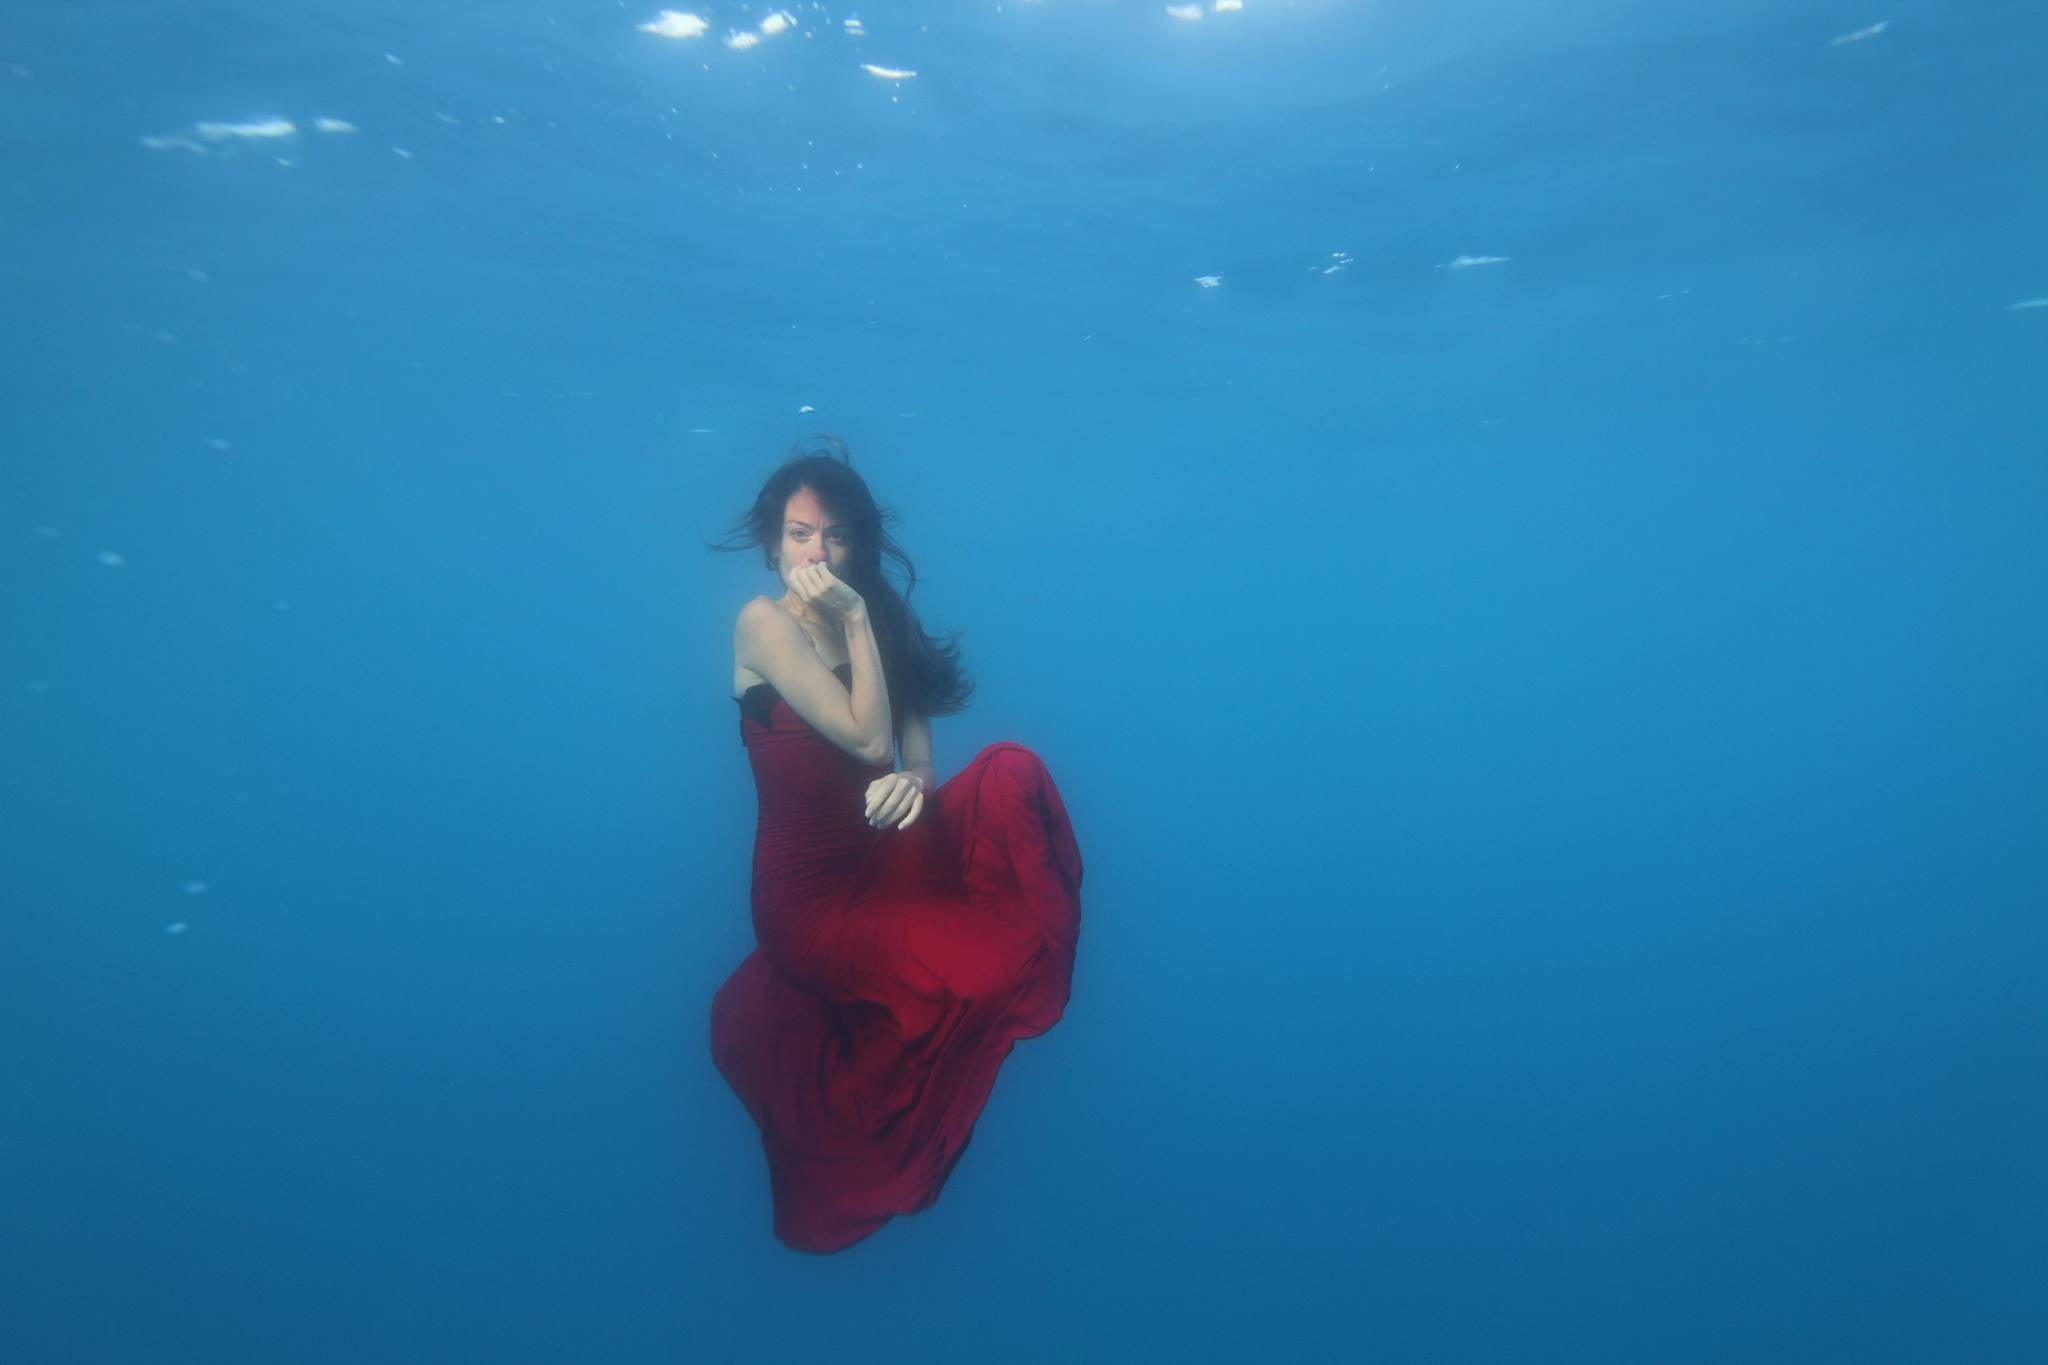 mermaids, red dress, underwater, women, fantasy girl, one person